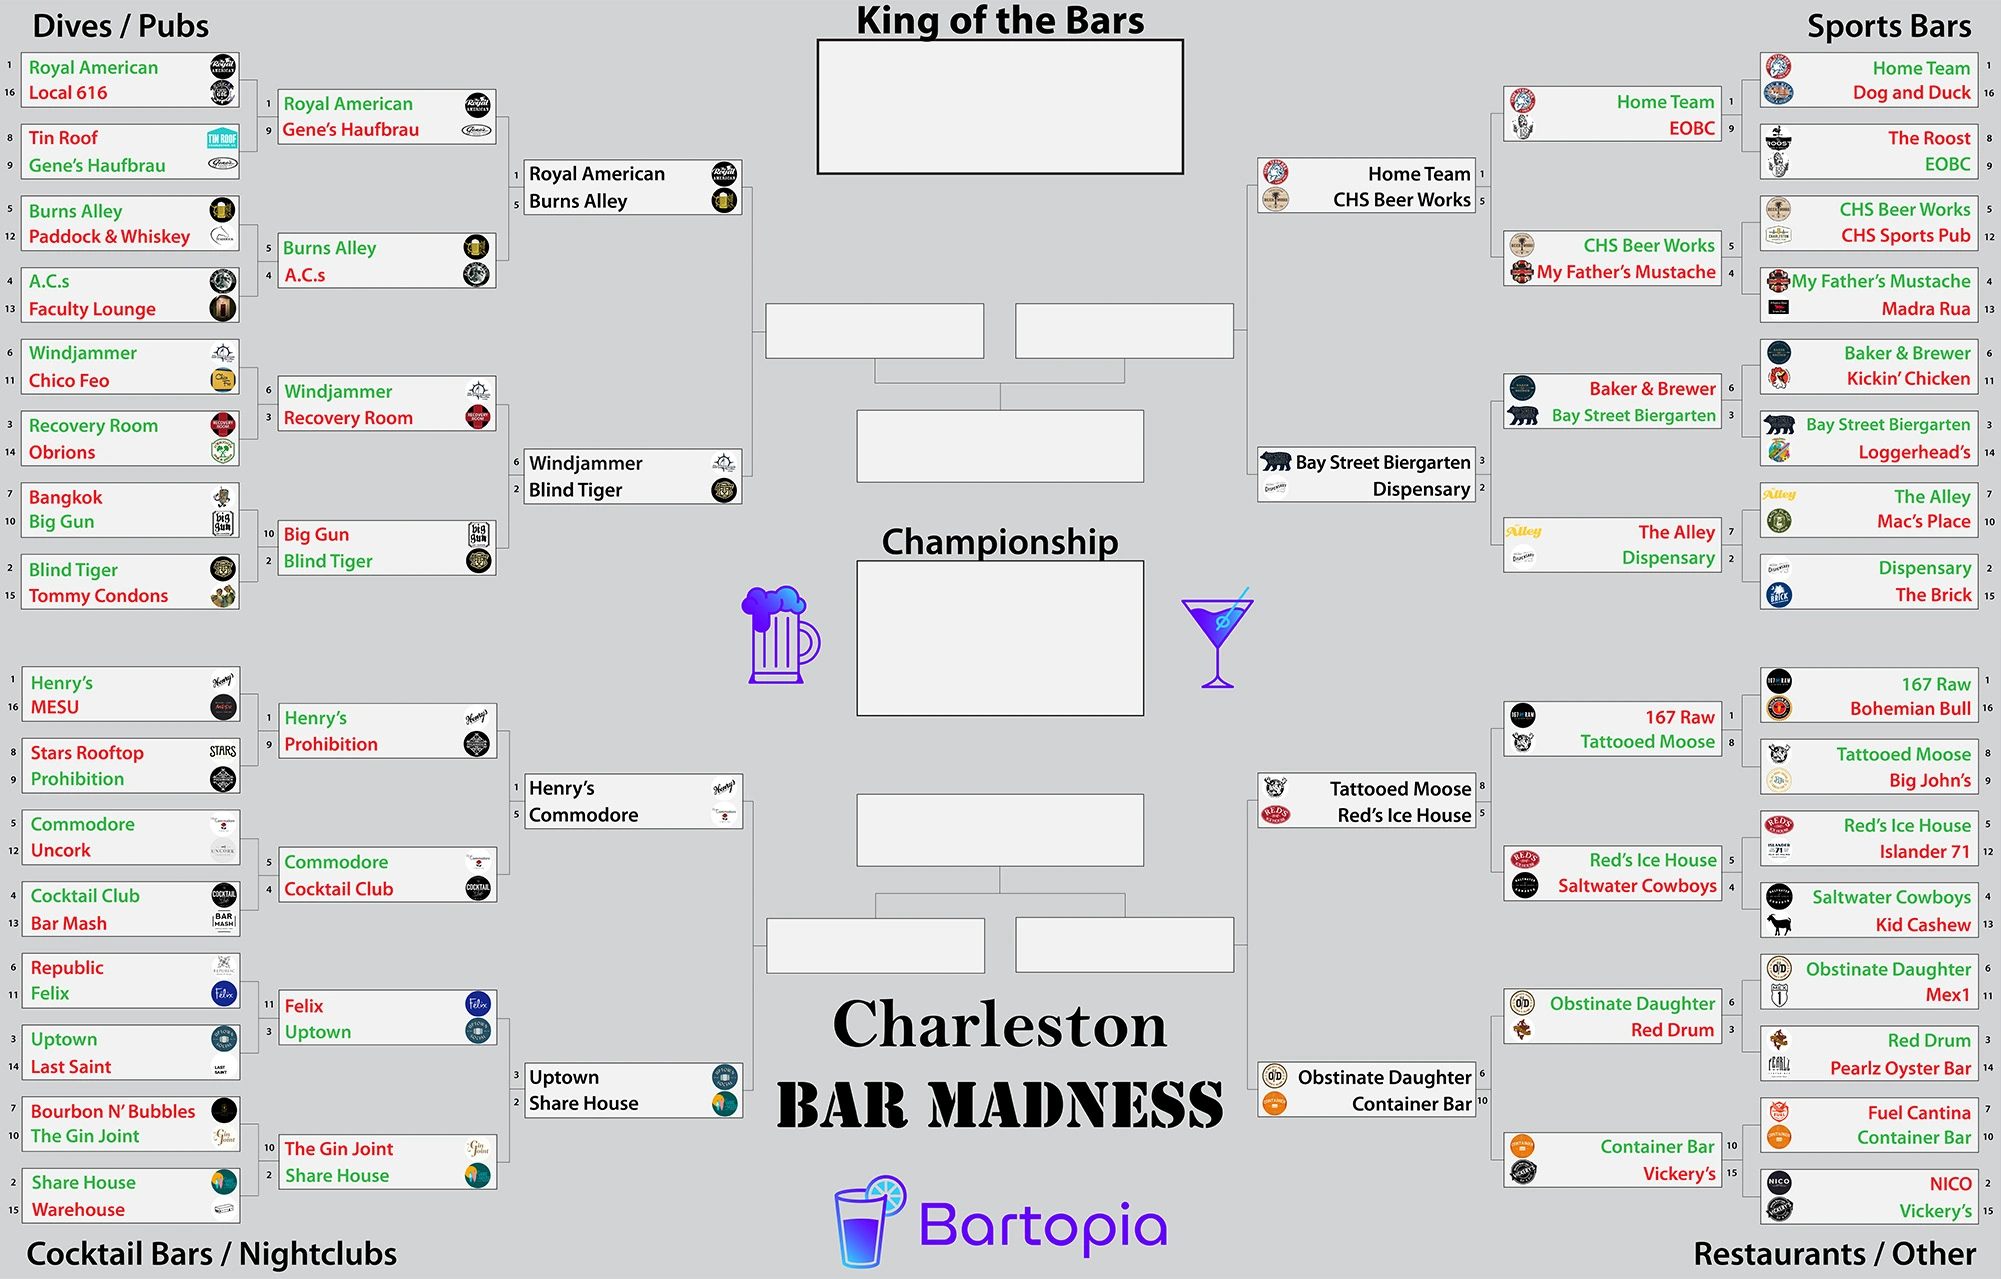 Charleston Bar March Madness Bracket Round 2